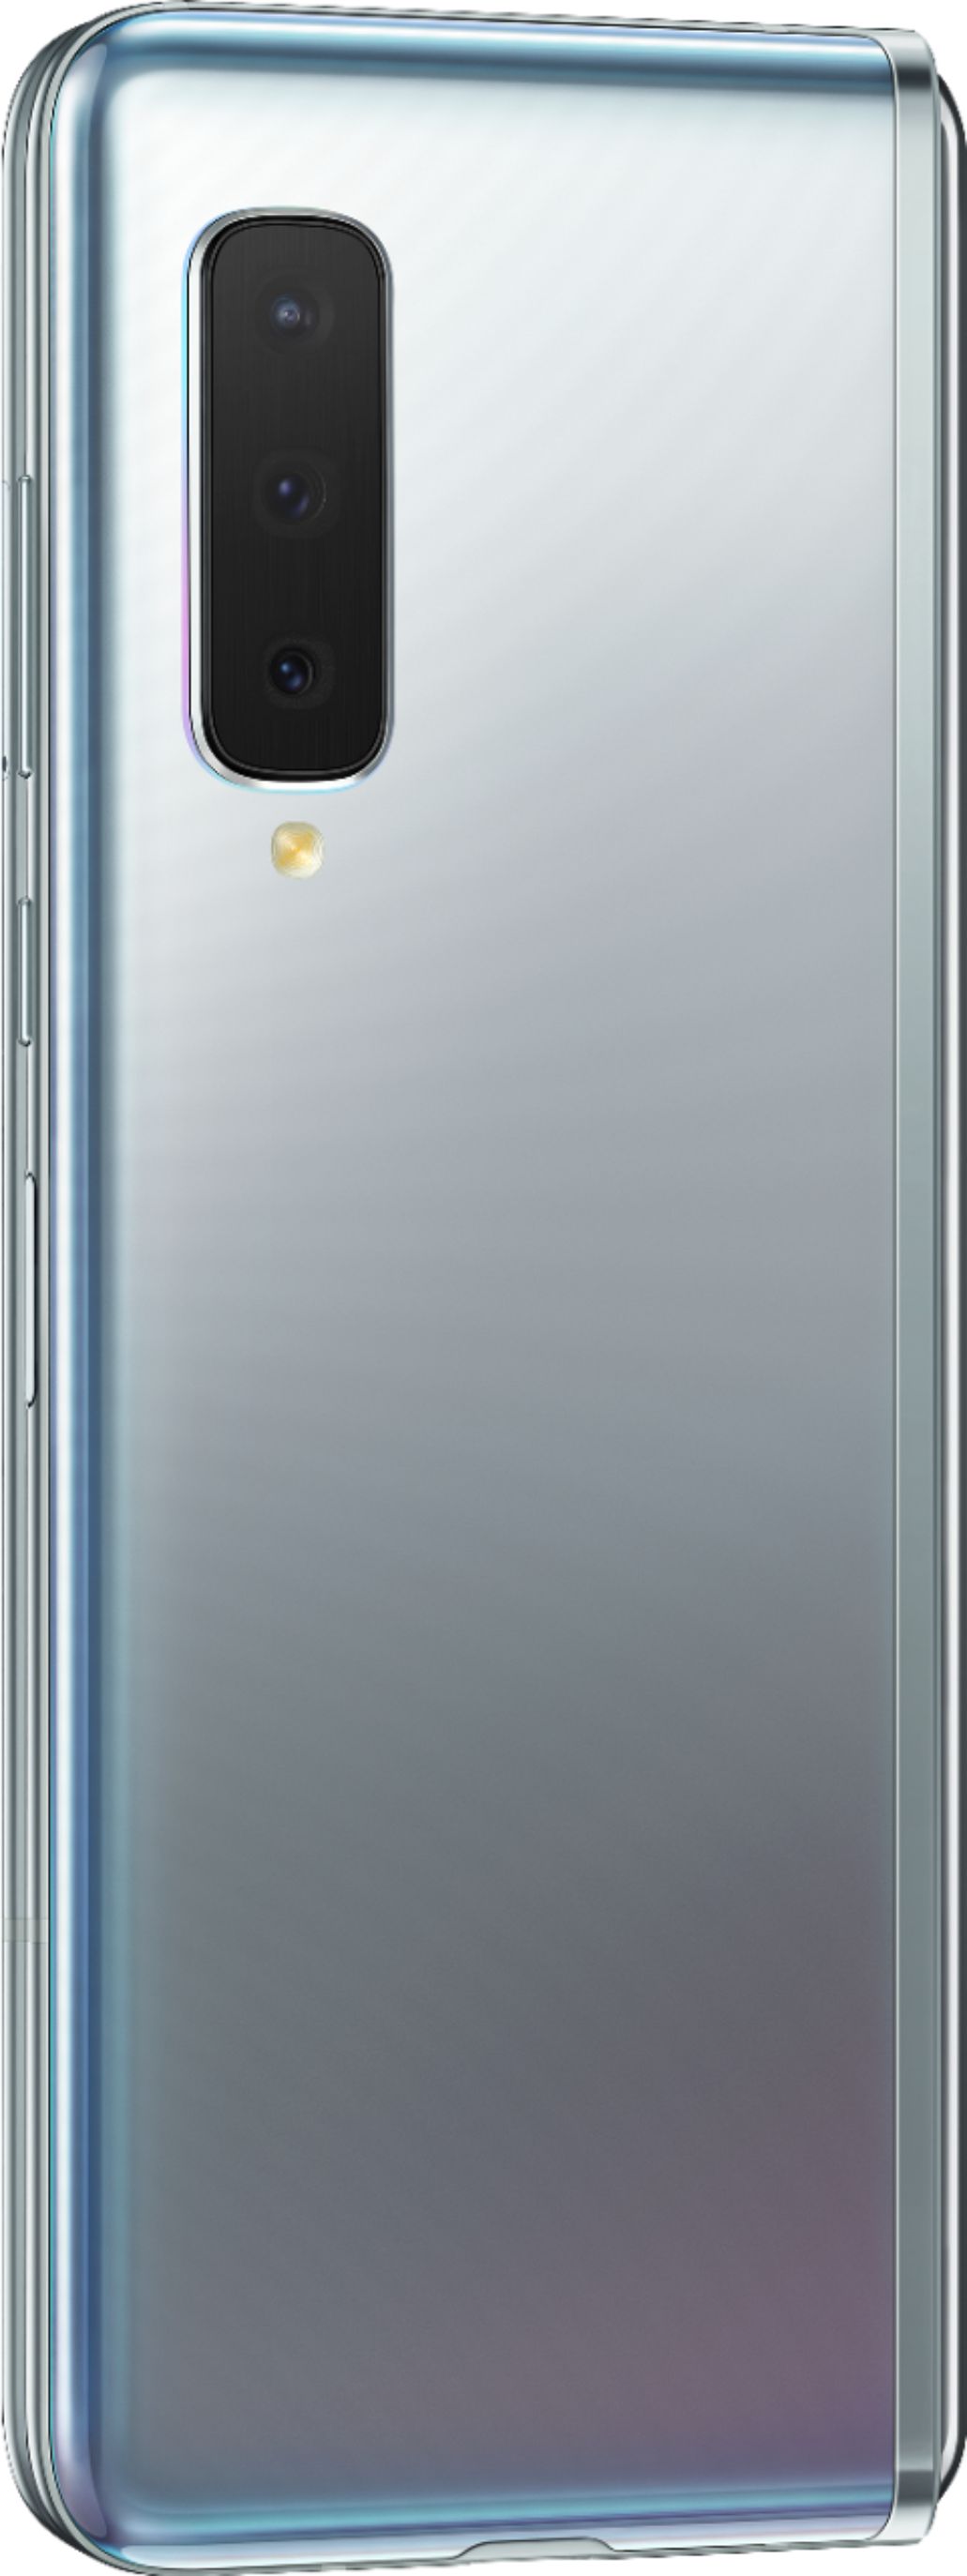 Angle View: Samsung - Galaxy S20+ 5G Enabled 128GB (Unlocked) - Aura Blue